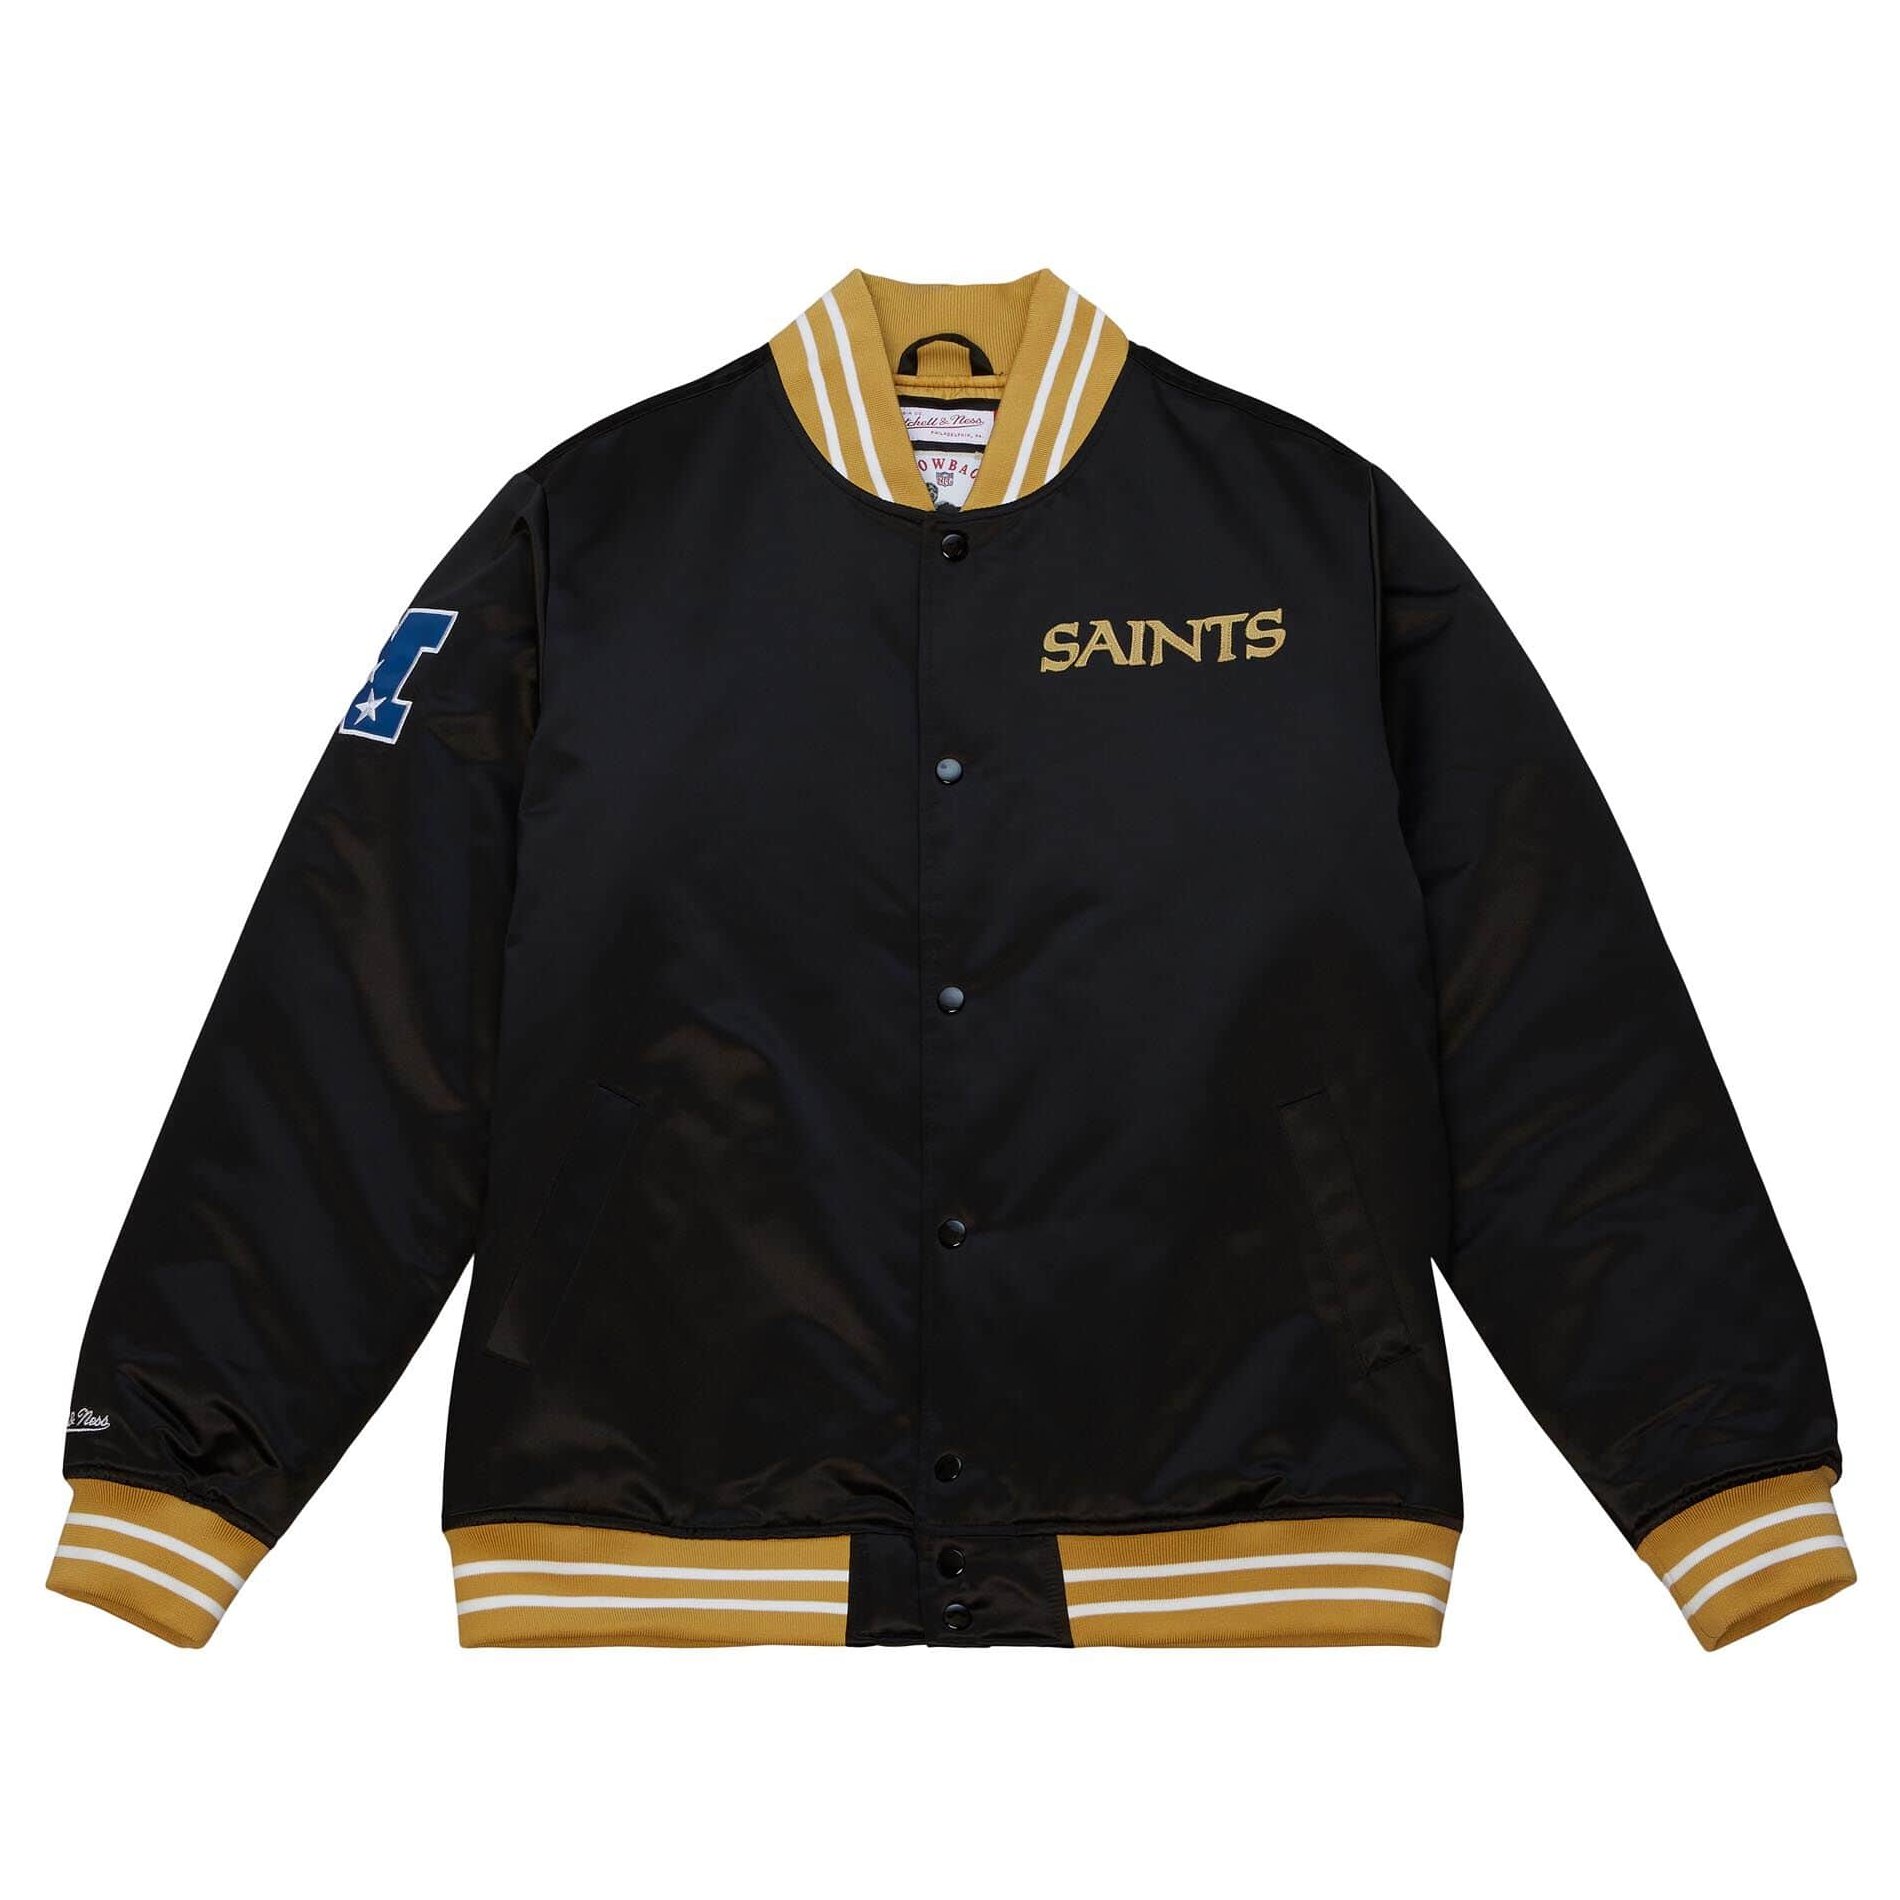 M&N Heavyweight Satin Jacke - NFL New Orleans Saints | Jacken ...